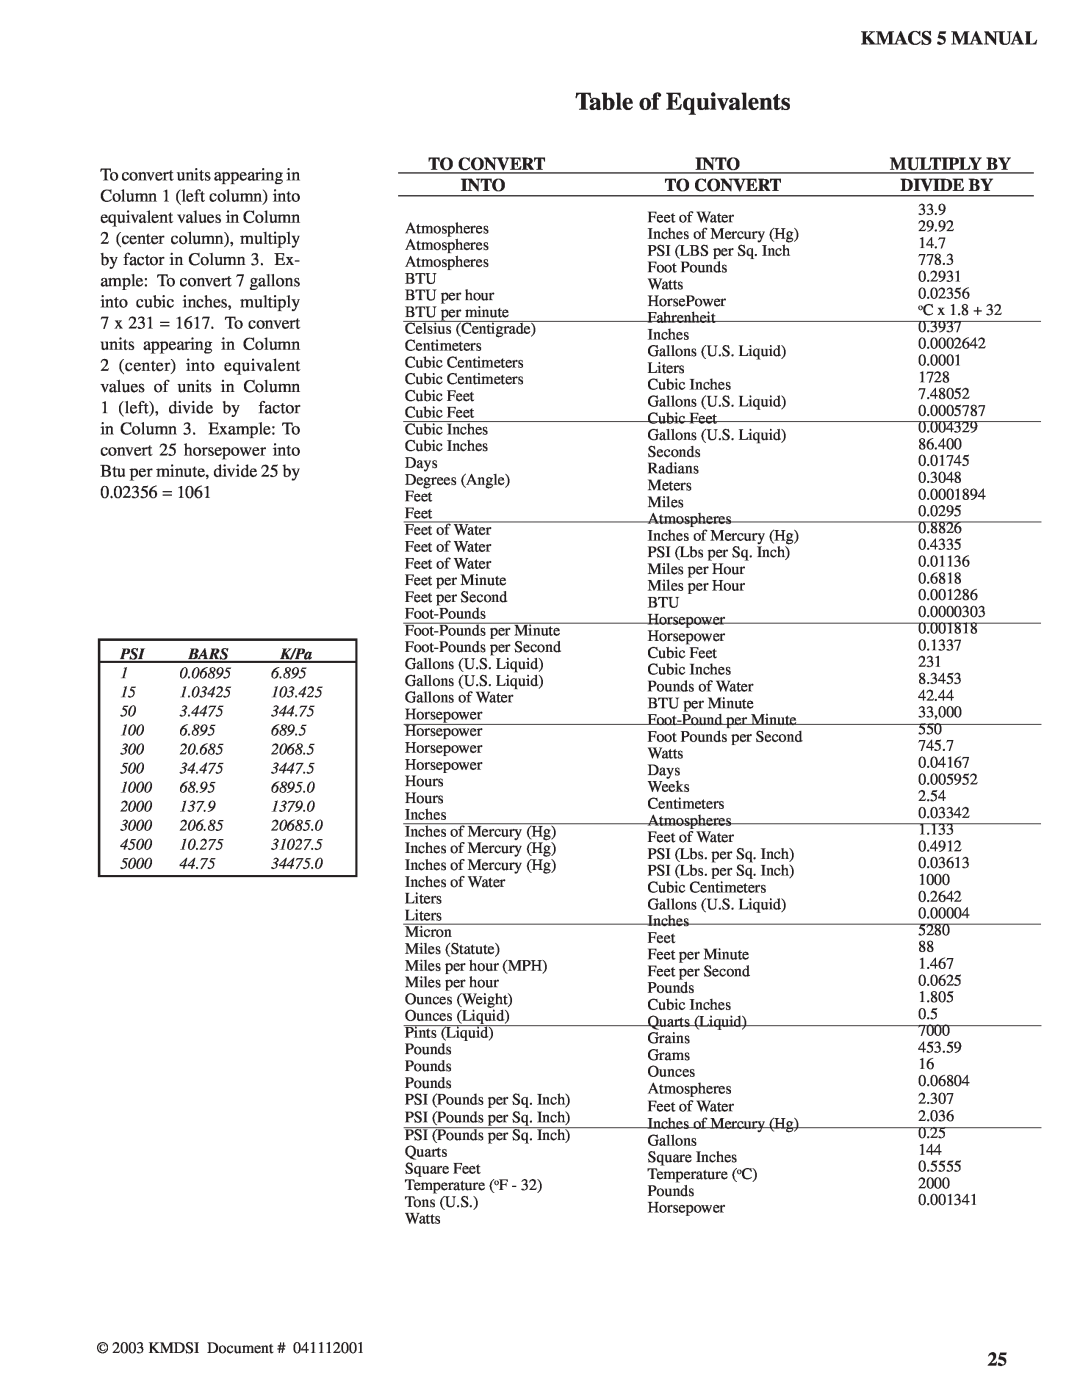 Kirby Air Control System manual Table of Equivalents, KMACS 5 MANUAL, Bars, K/Pa 